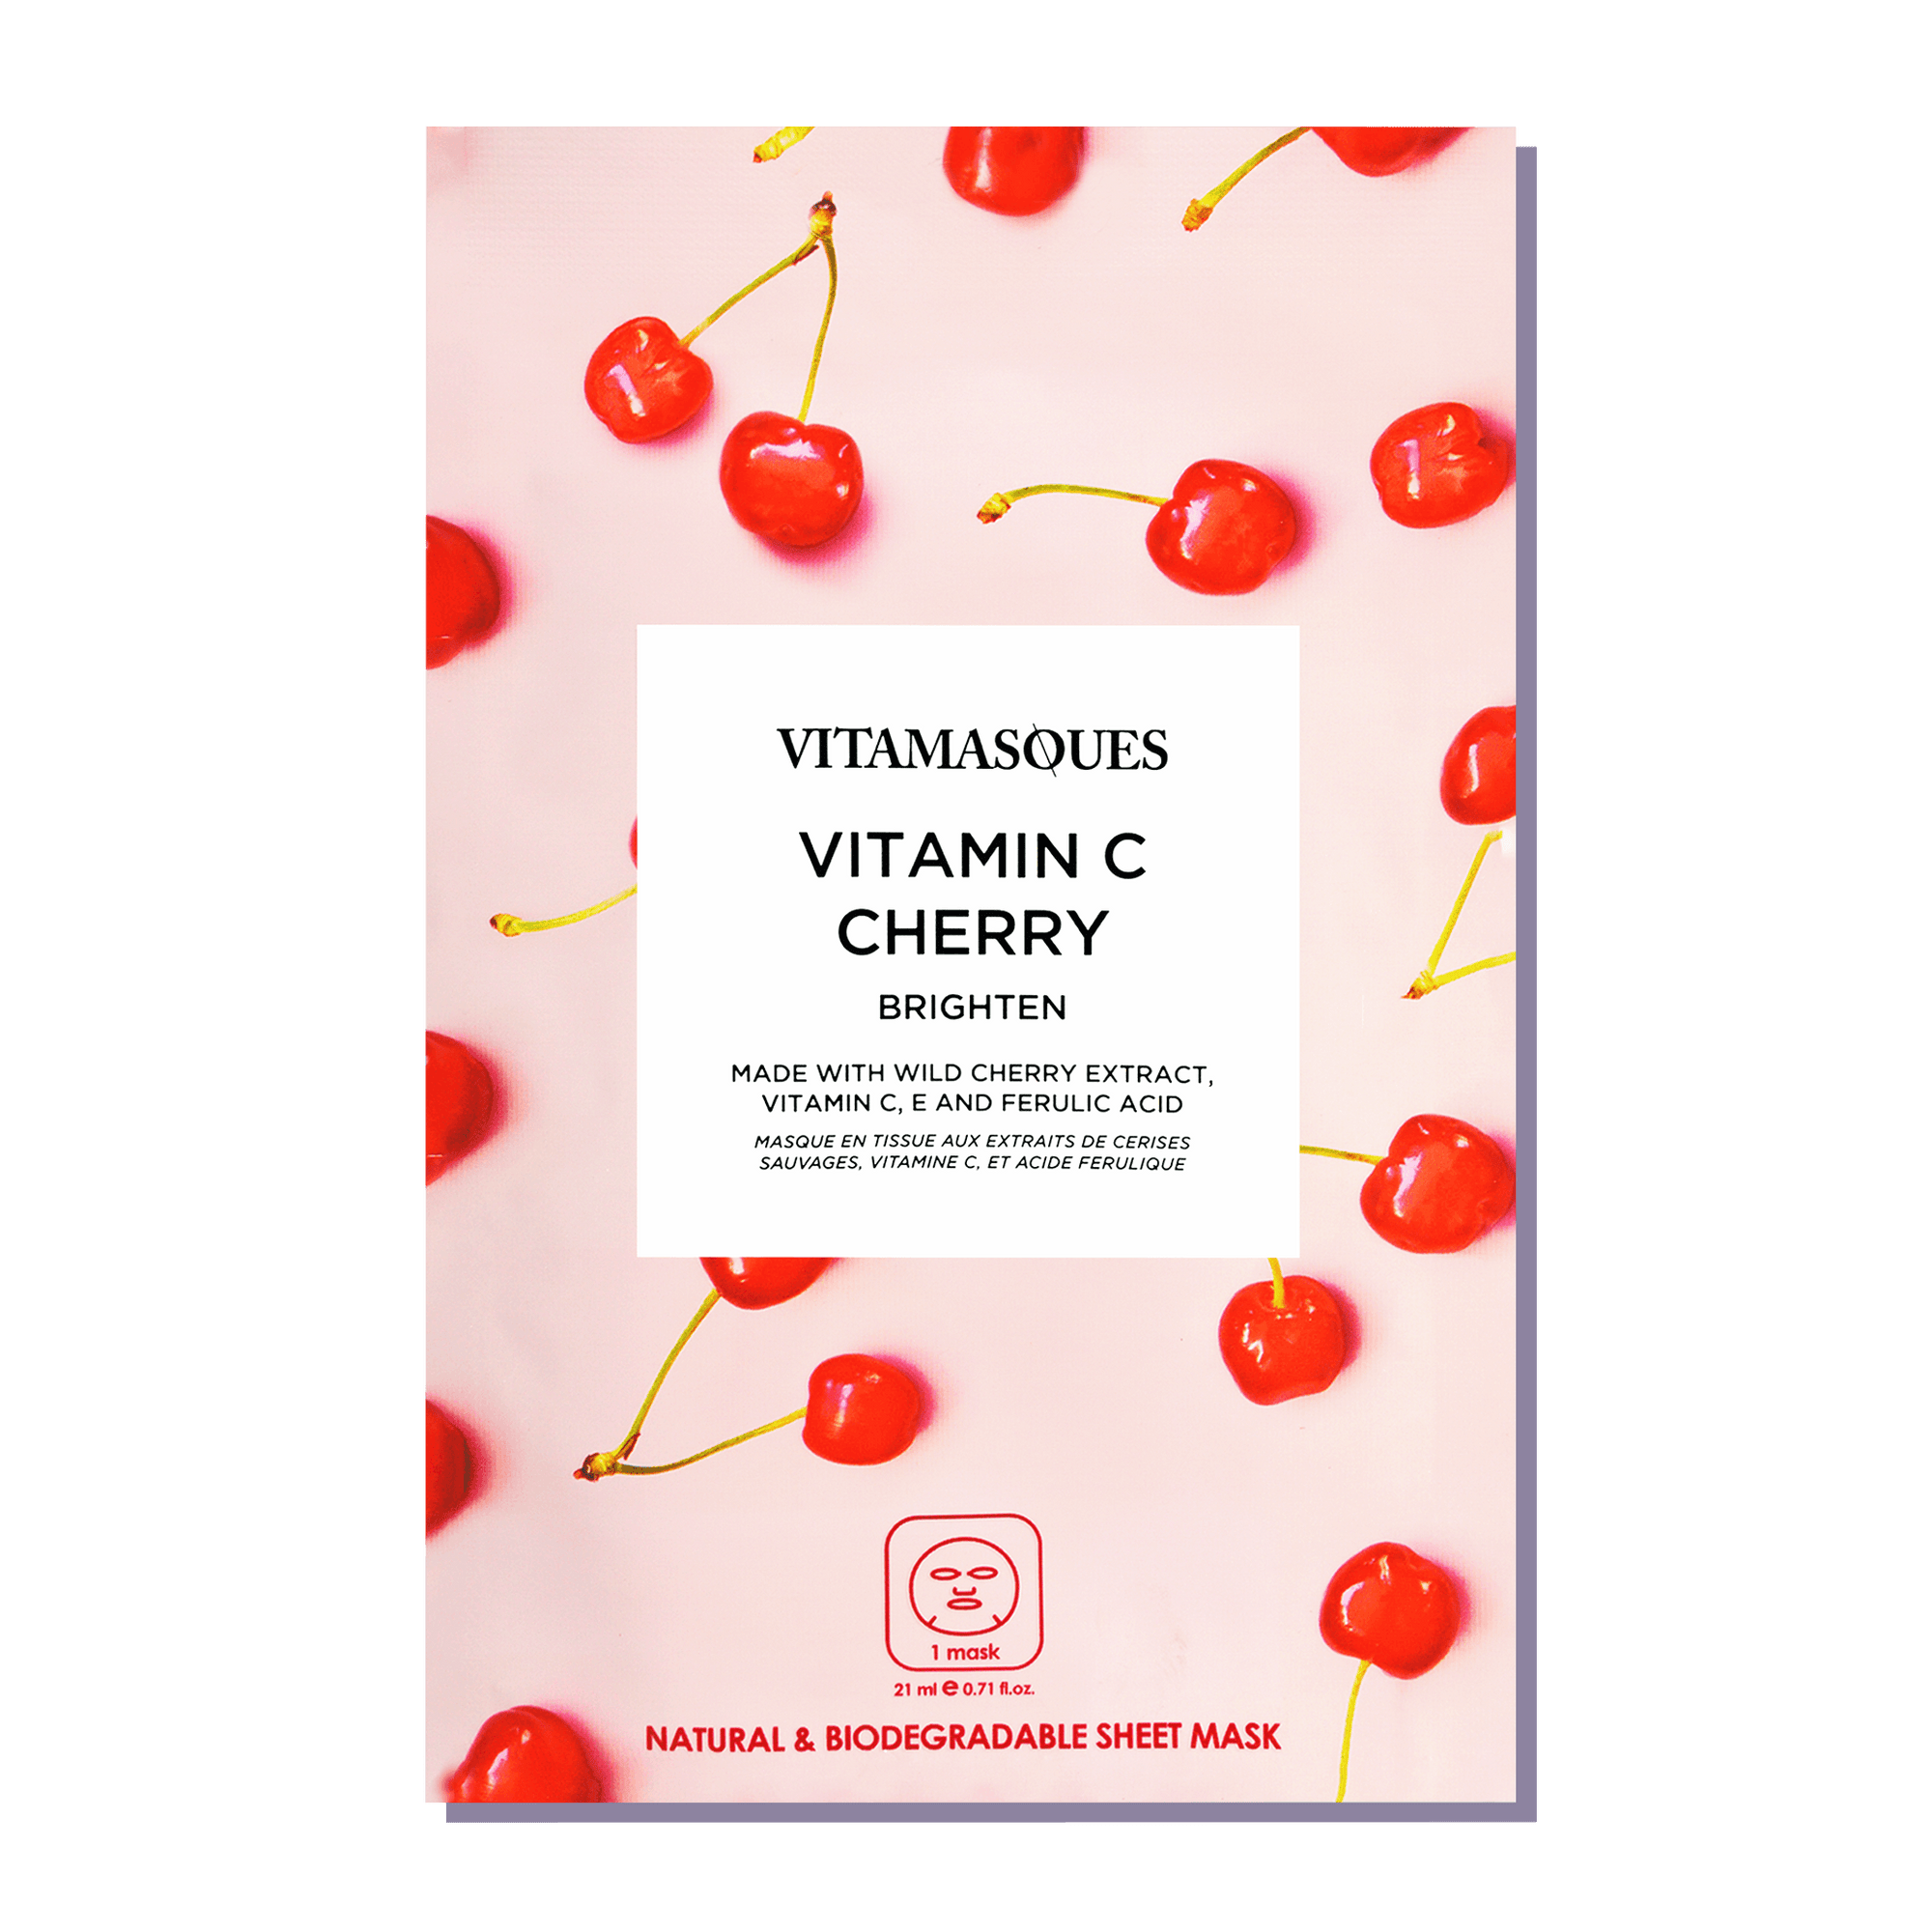 Vitamin C Cherry Face Sheet Mask - Vitamasques